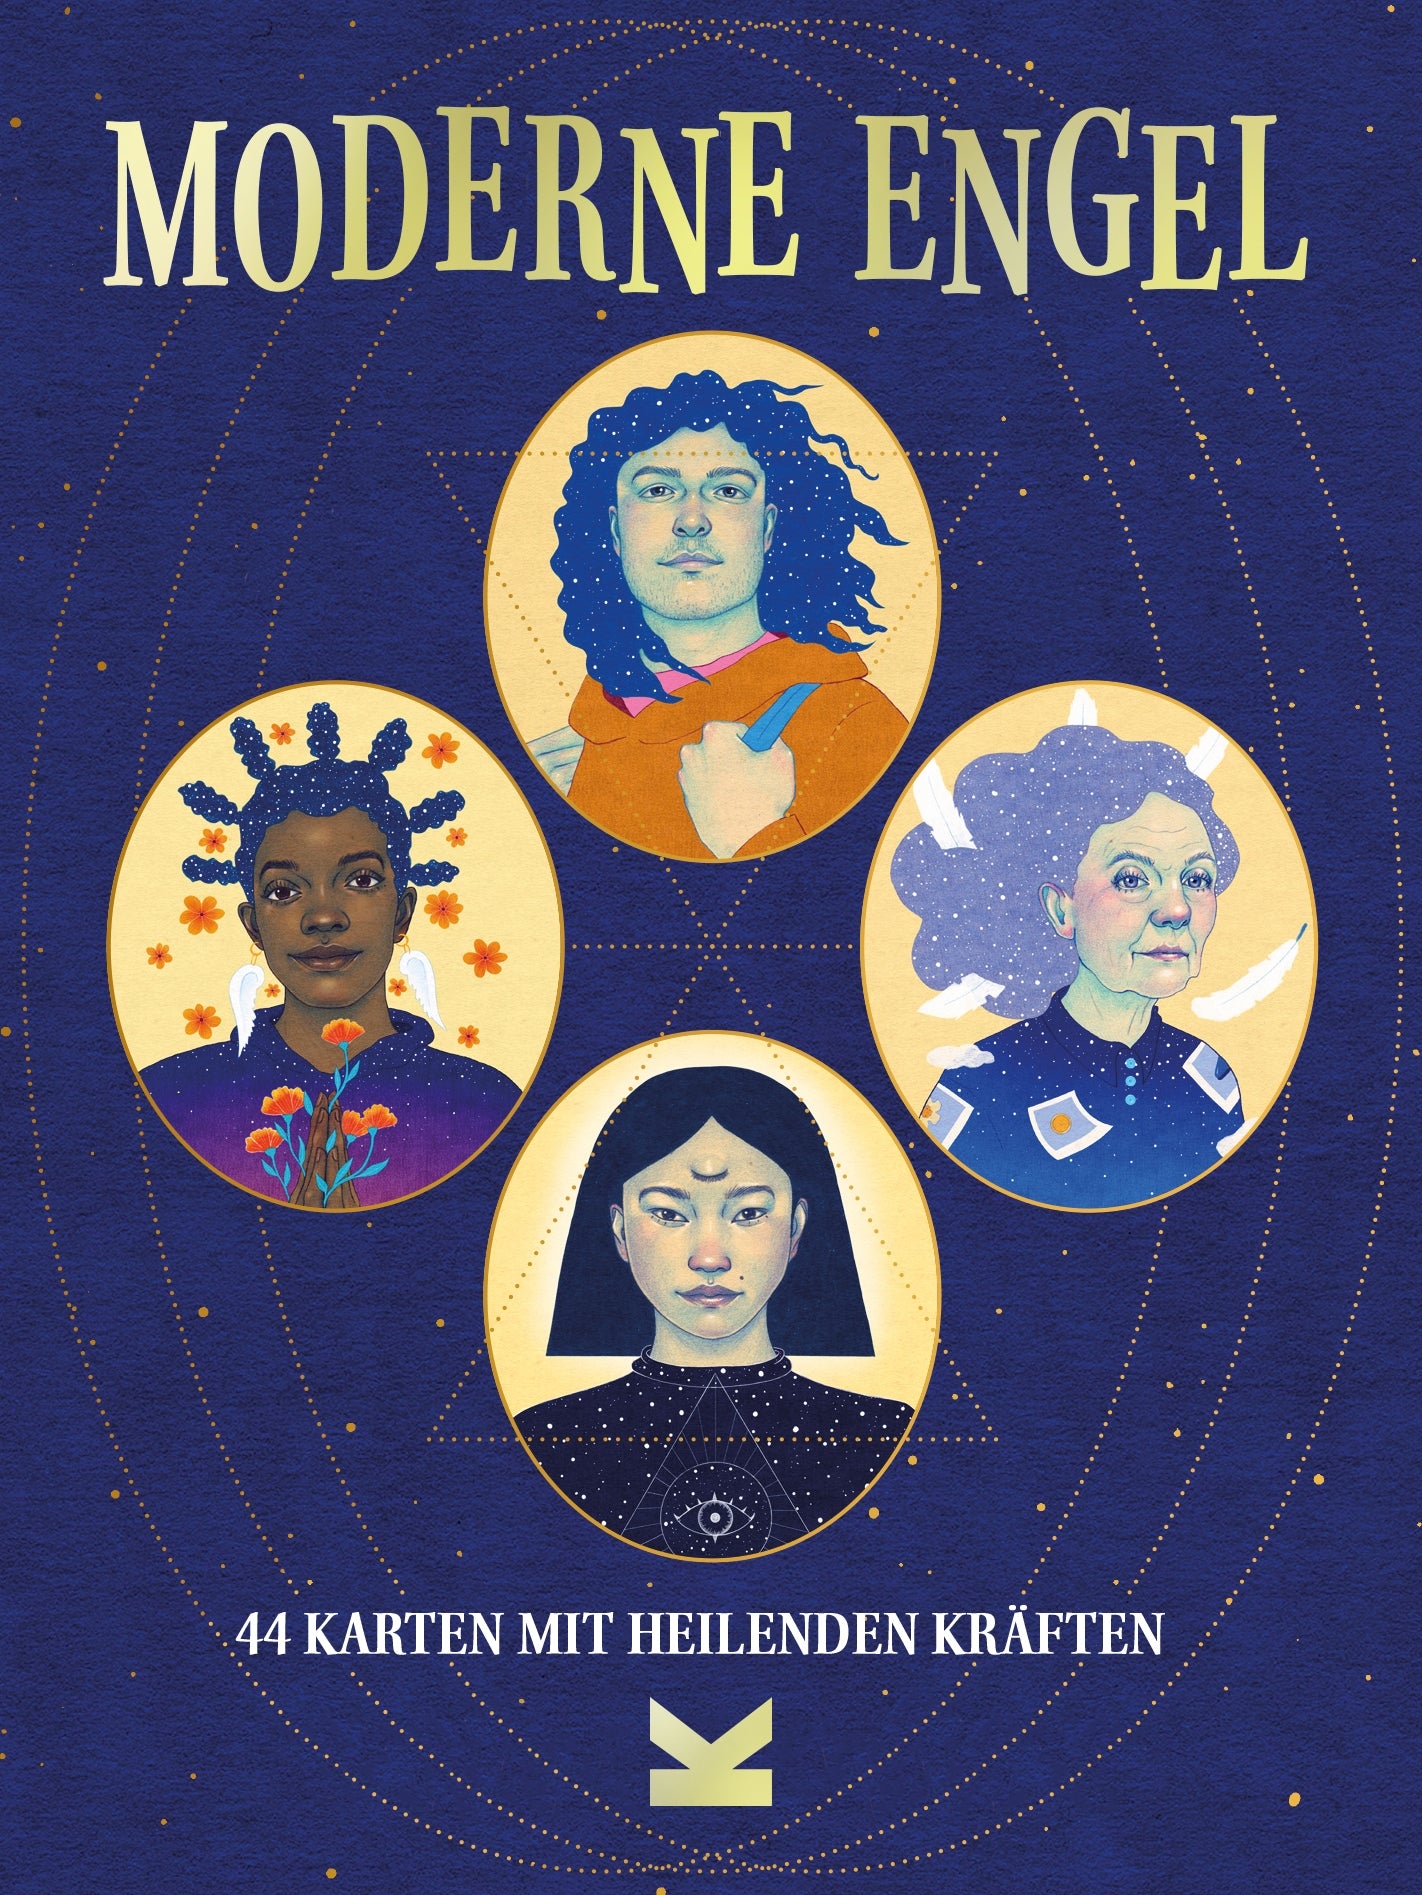 Moderne Engel by Theresa Cheung, Natalie Foss, Frederik Kugler